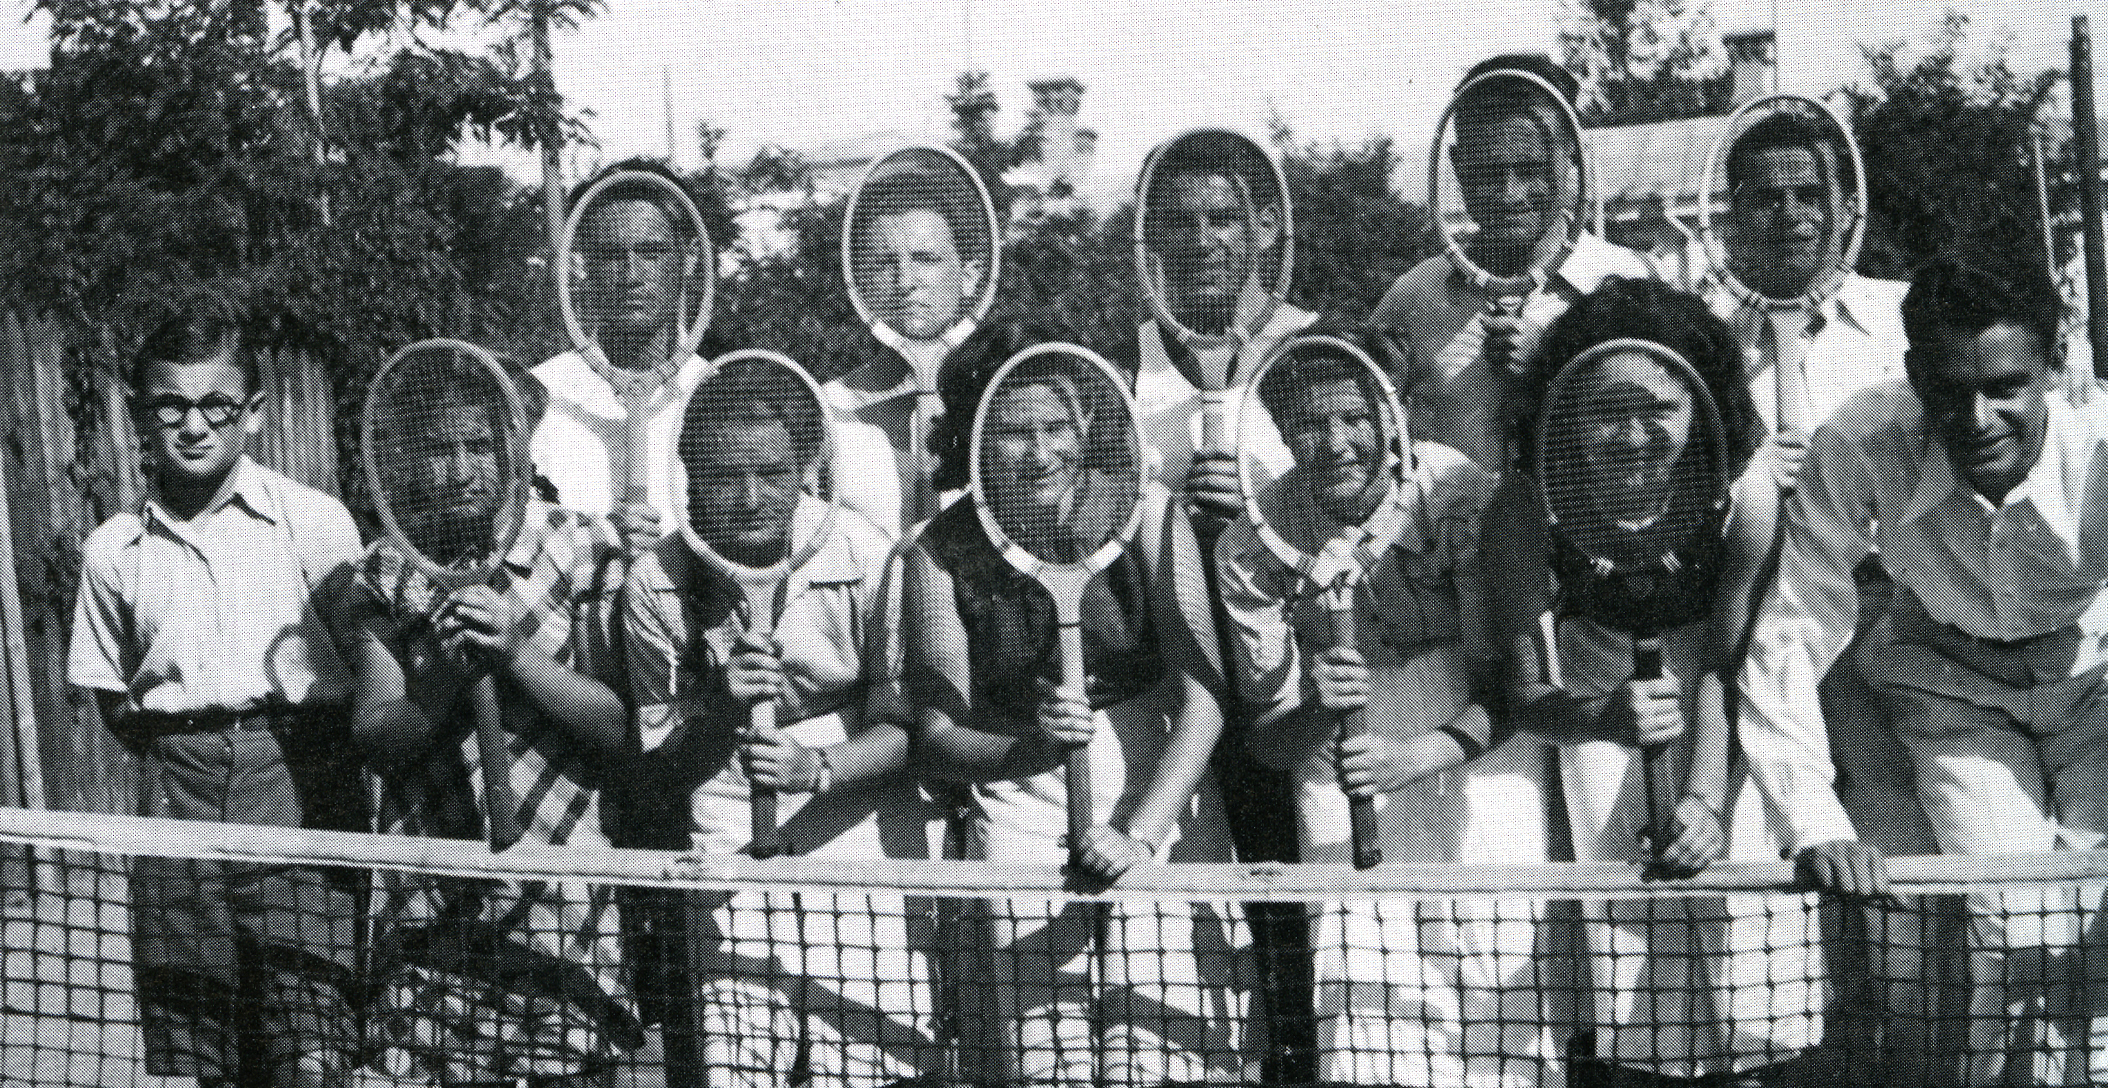 Jewish youth at the municipal tennis courts, Bălţi, 1939